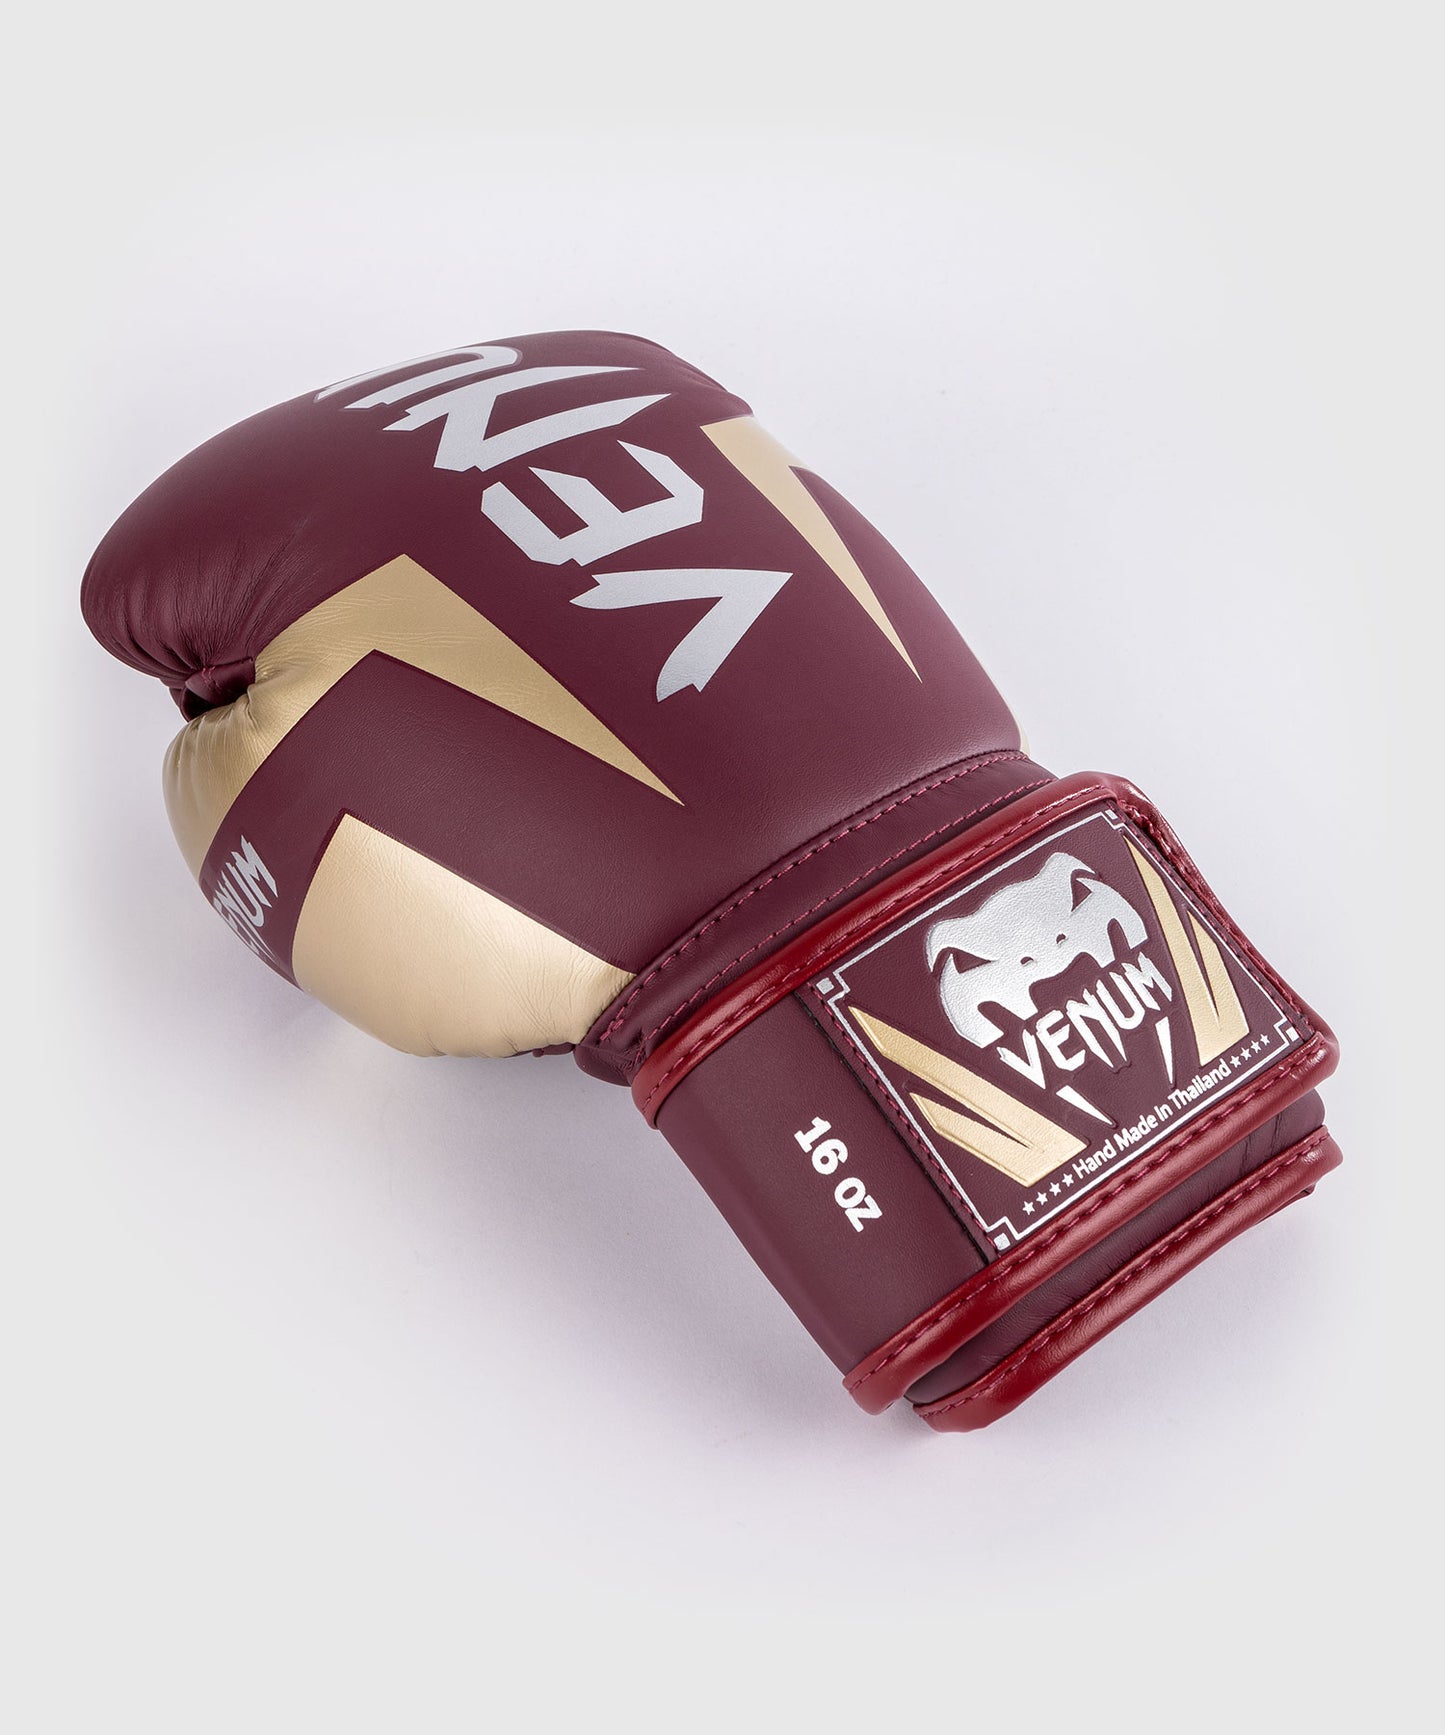 Venum Elite Boxhandschuhe - Burgund/Gold